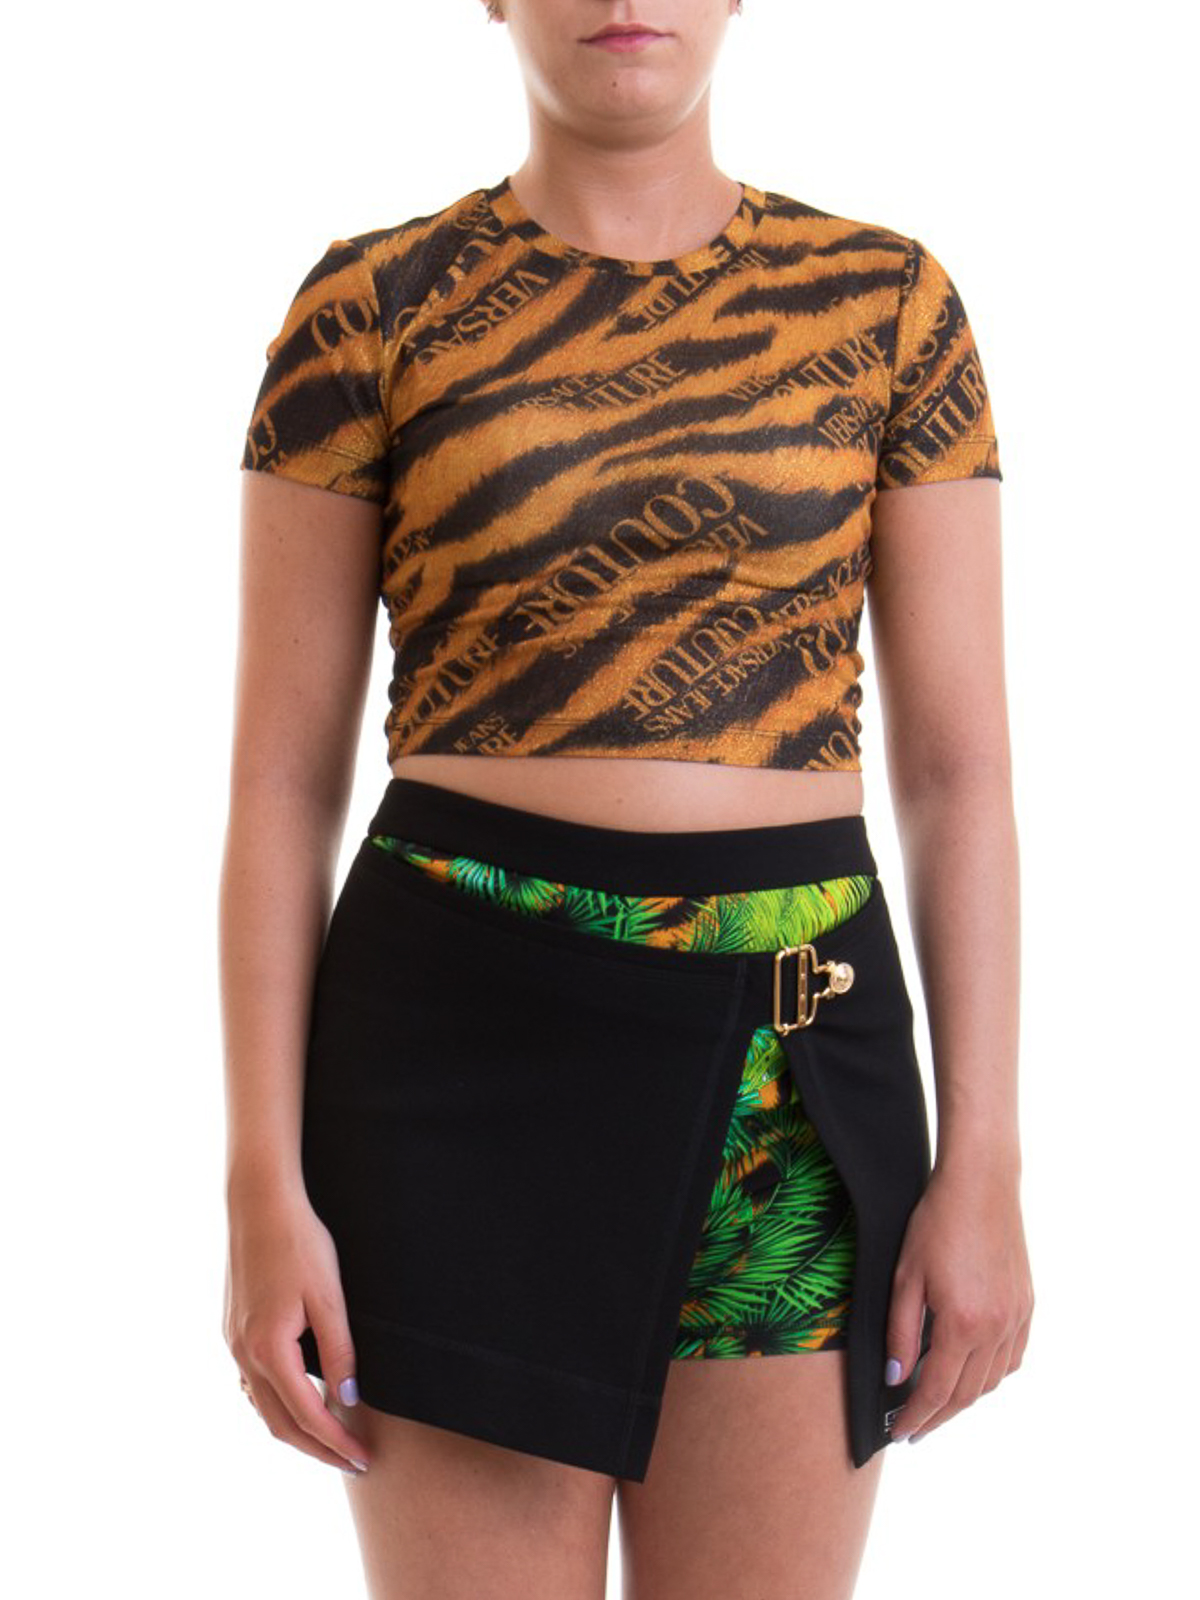 versace t shirt tiger